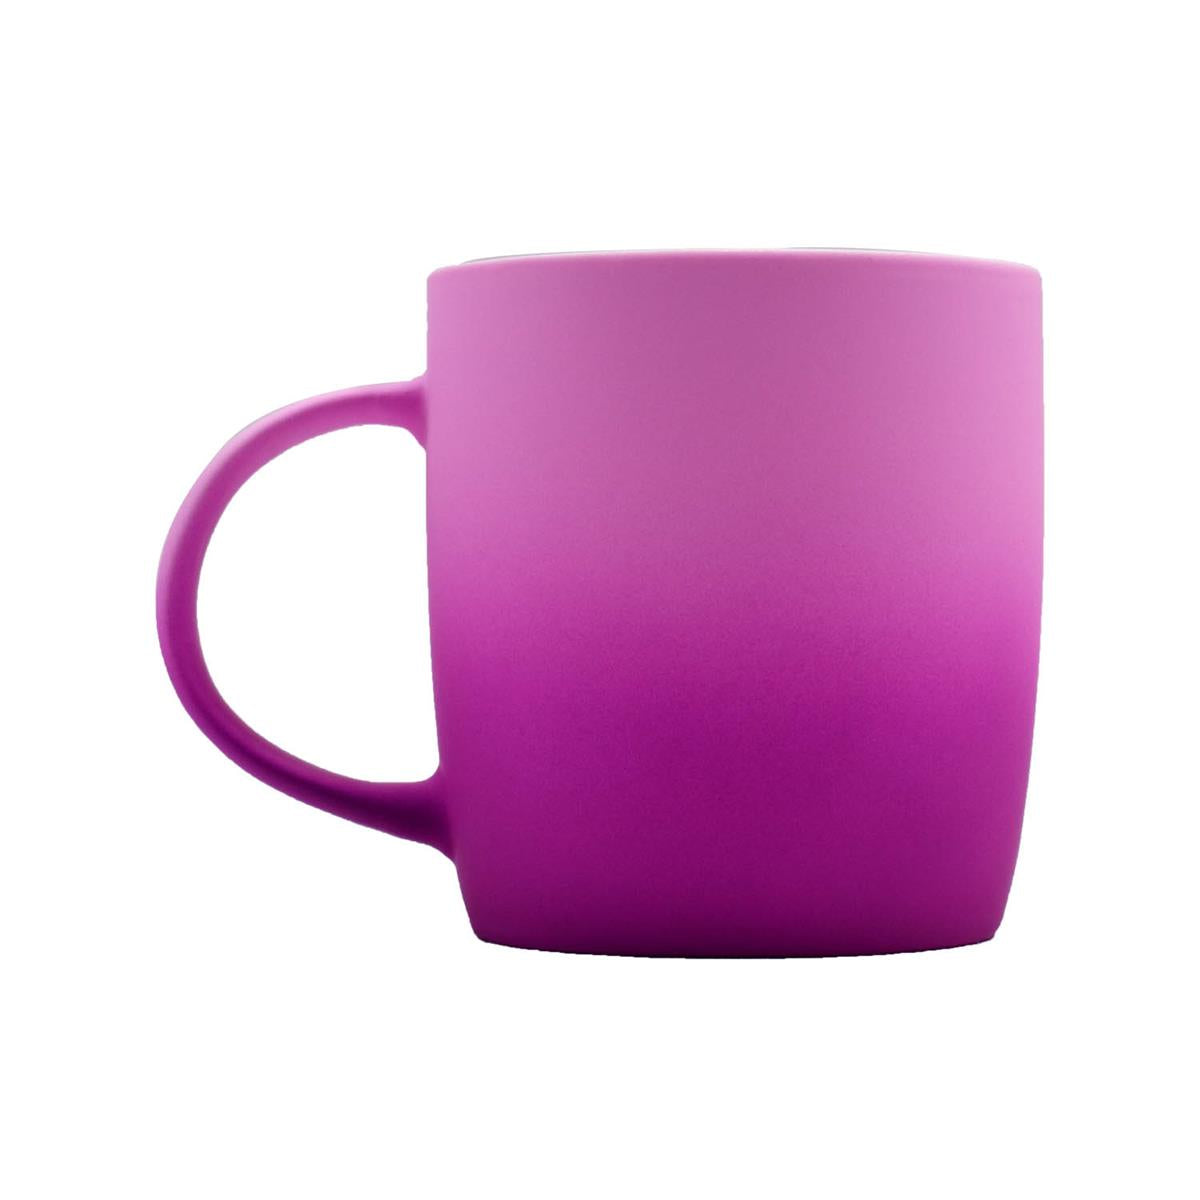 Ceramic Coffee or Tea Mug with handle - 325ml (BPY173-B)